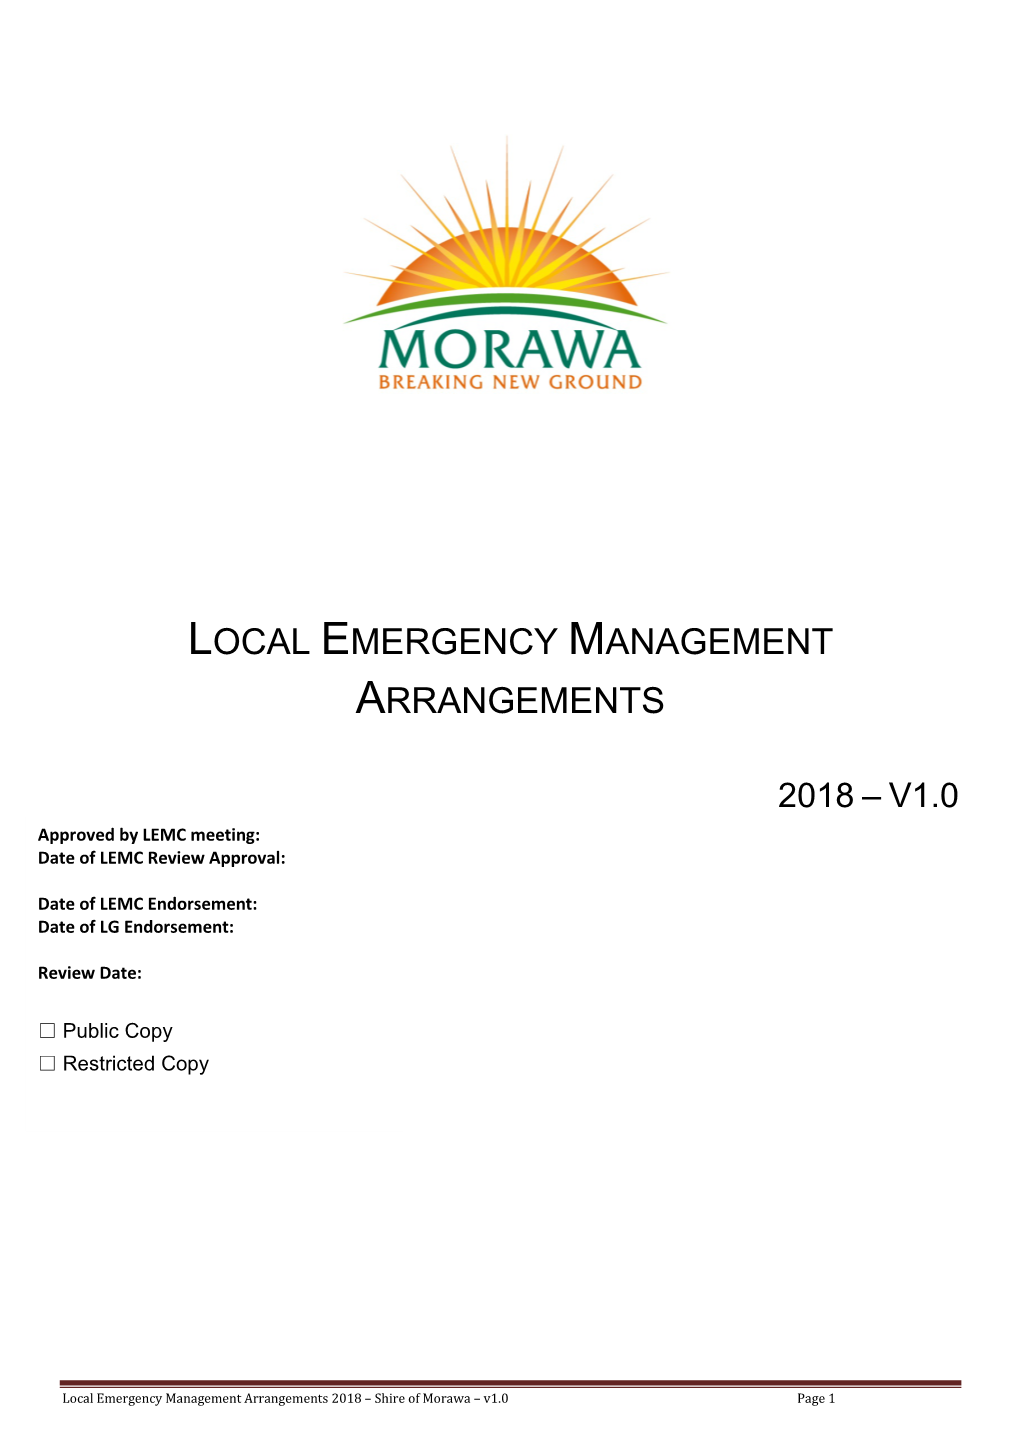 Local Emergency Management Arrangements